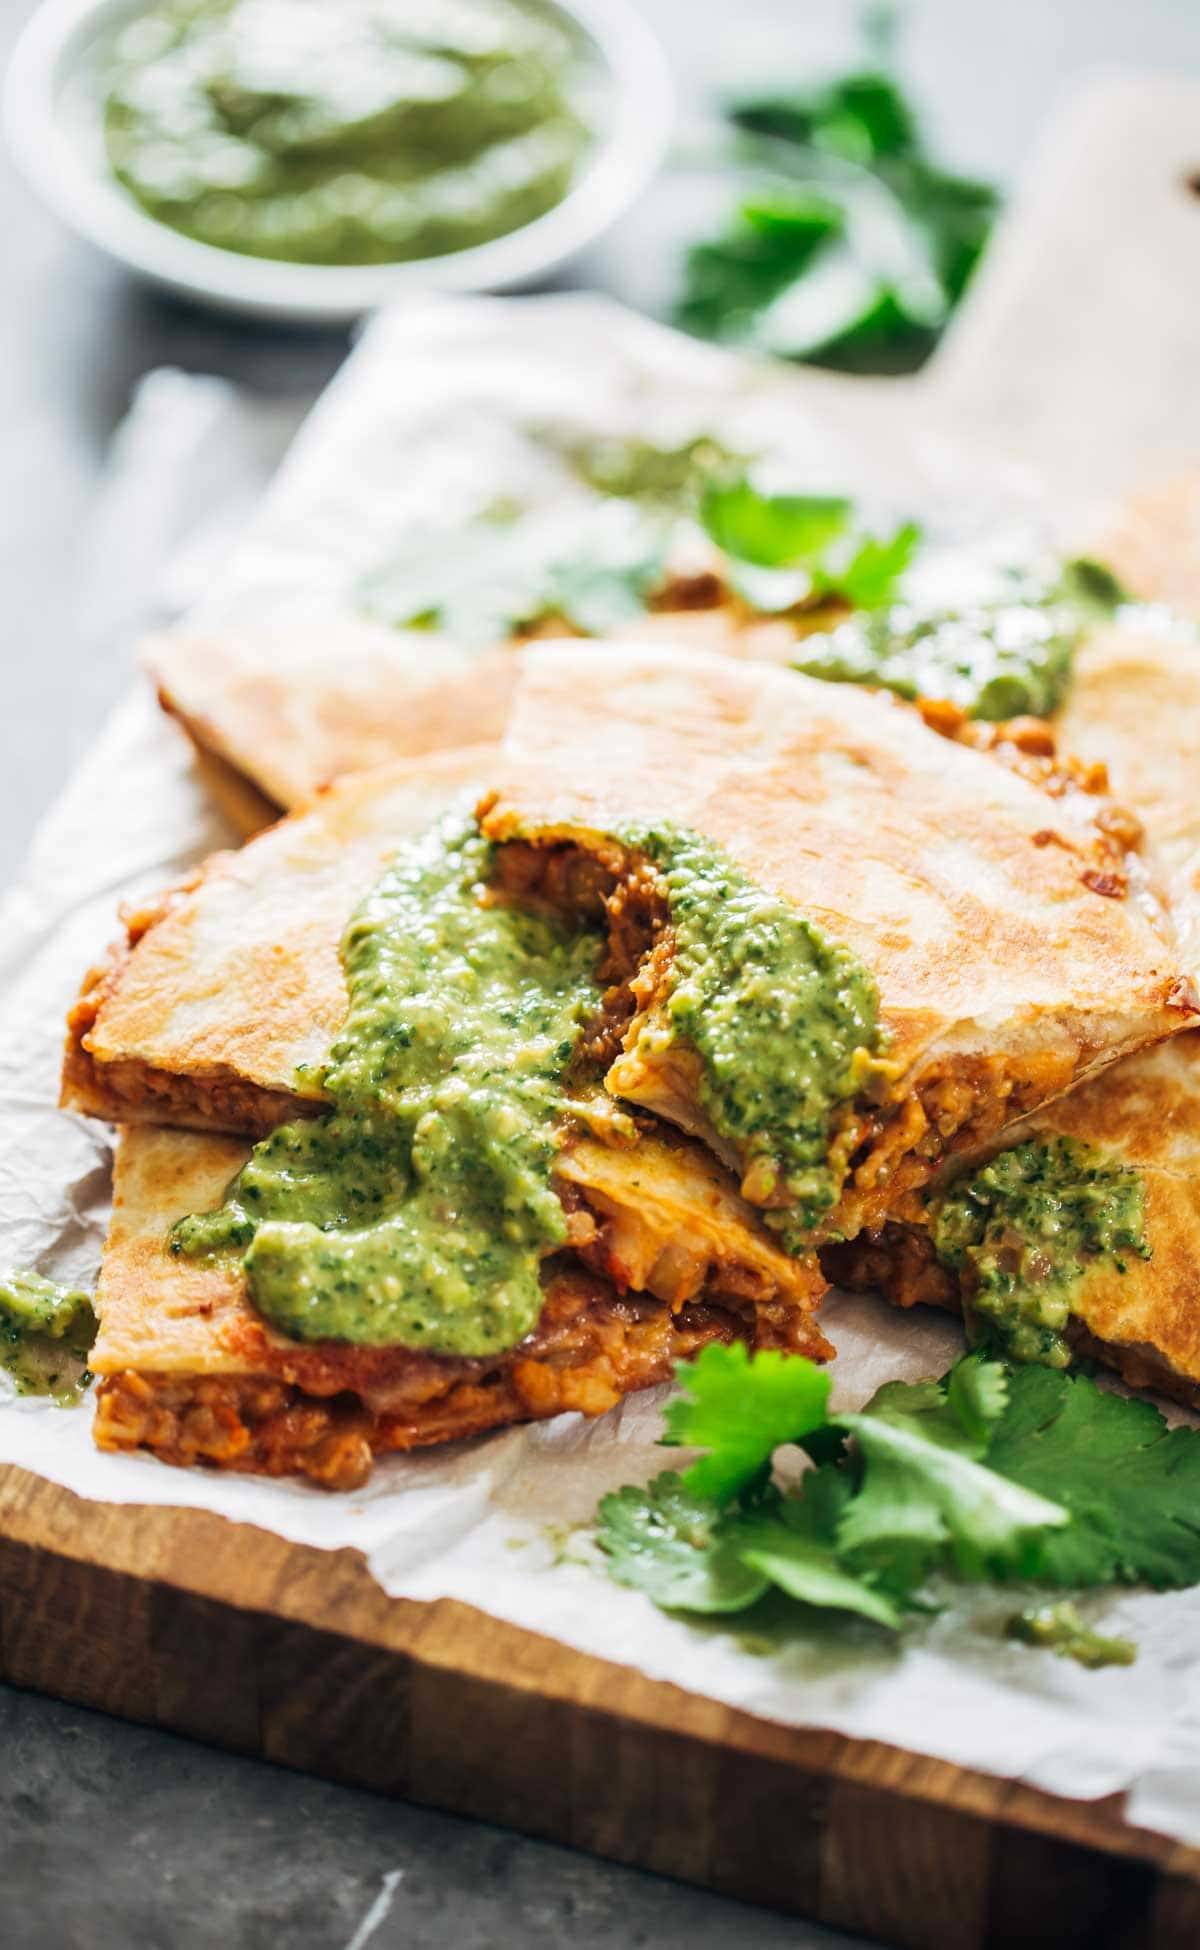 Quesadillas with magic green sauce.